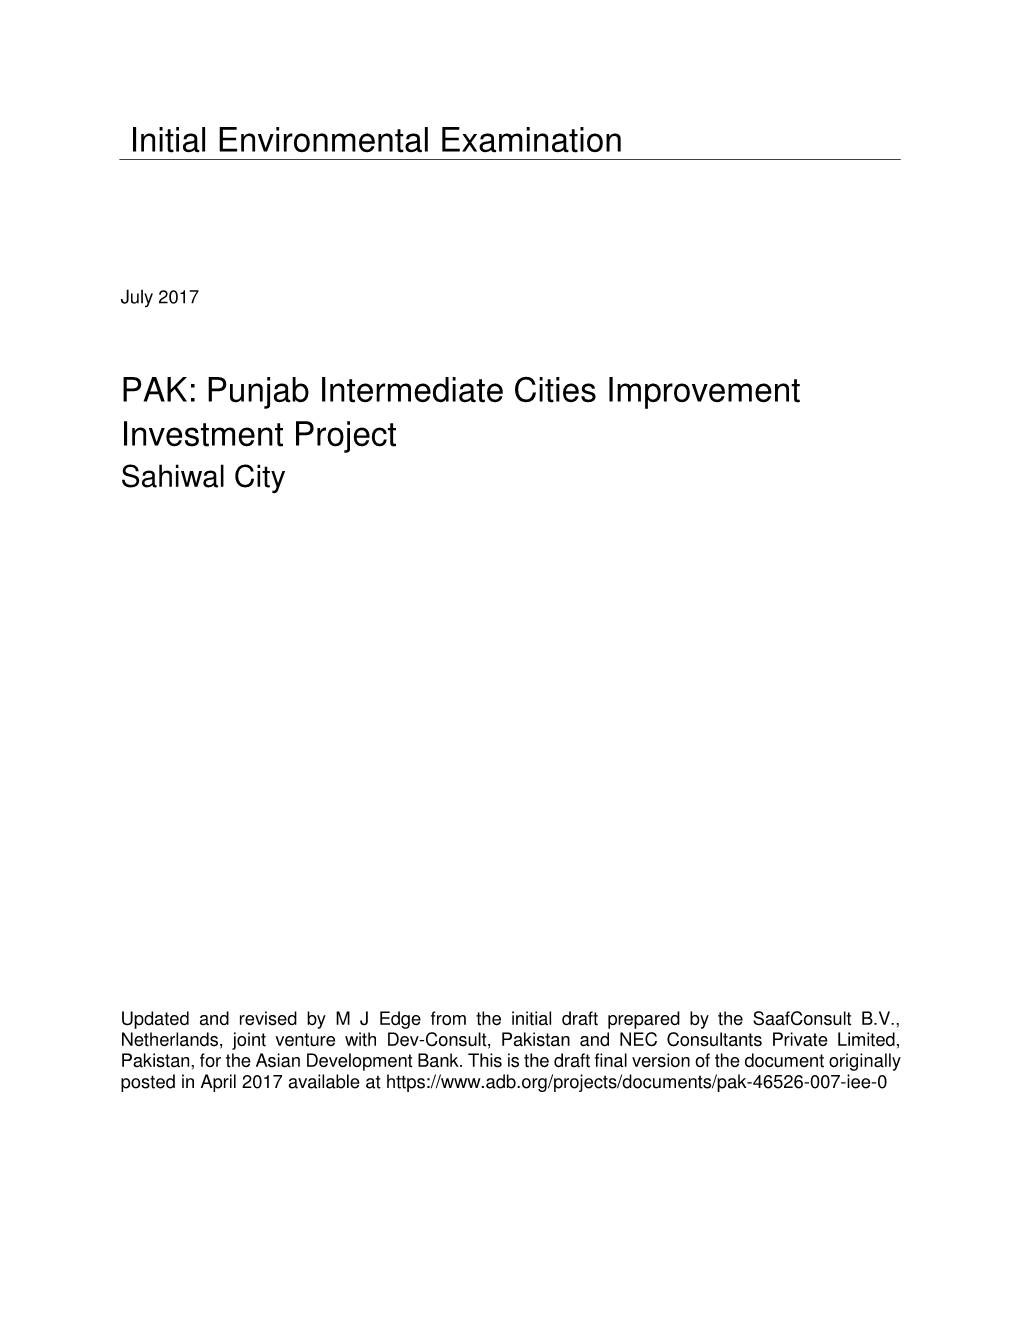 Punjab Intermediate Cities Improvement Investment Project Sahiwal City